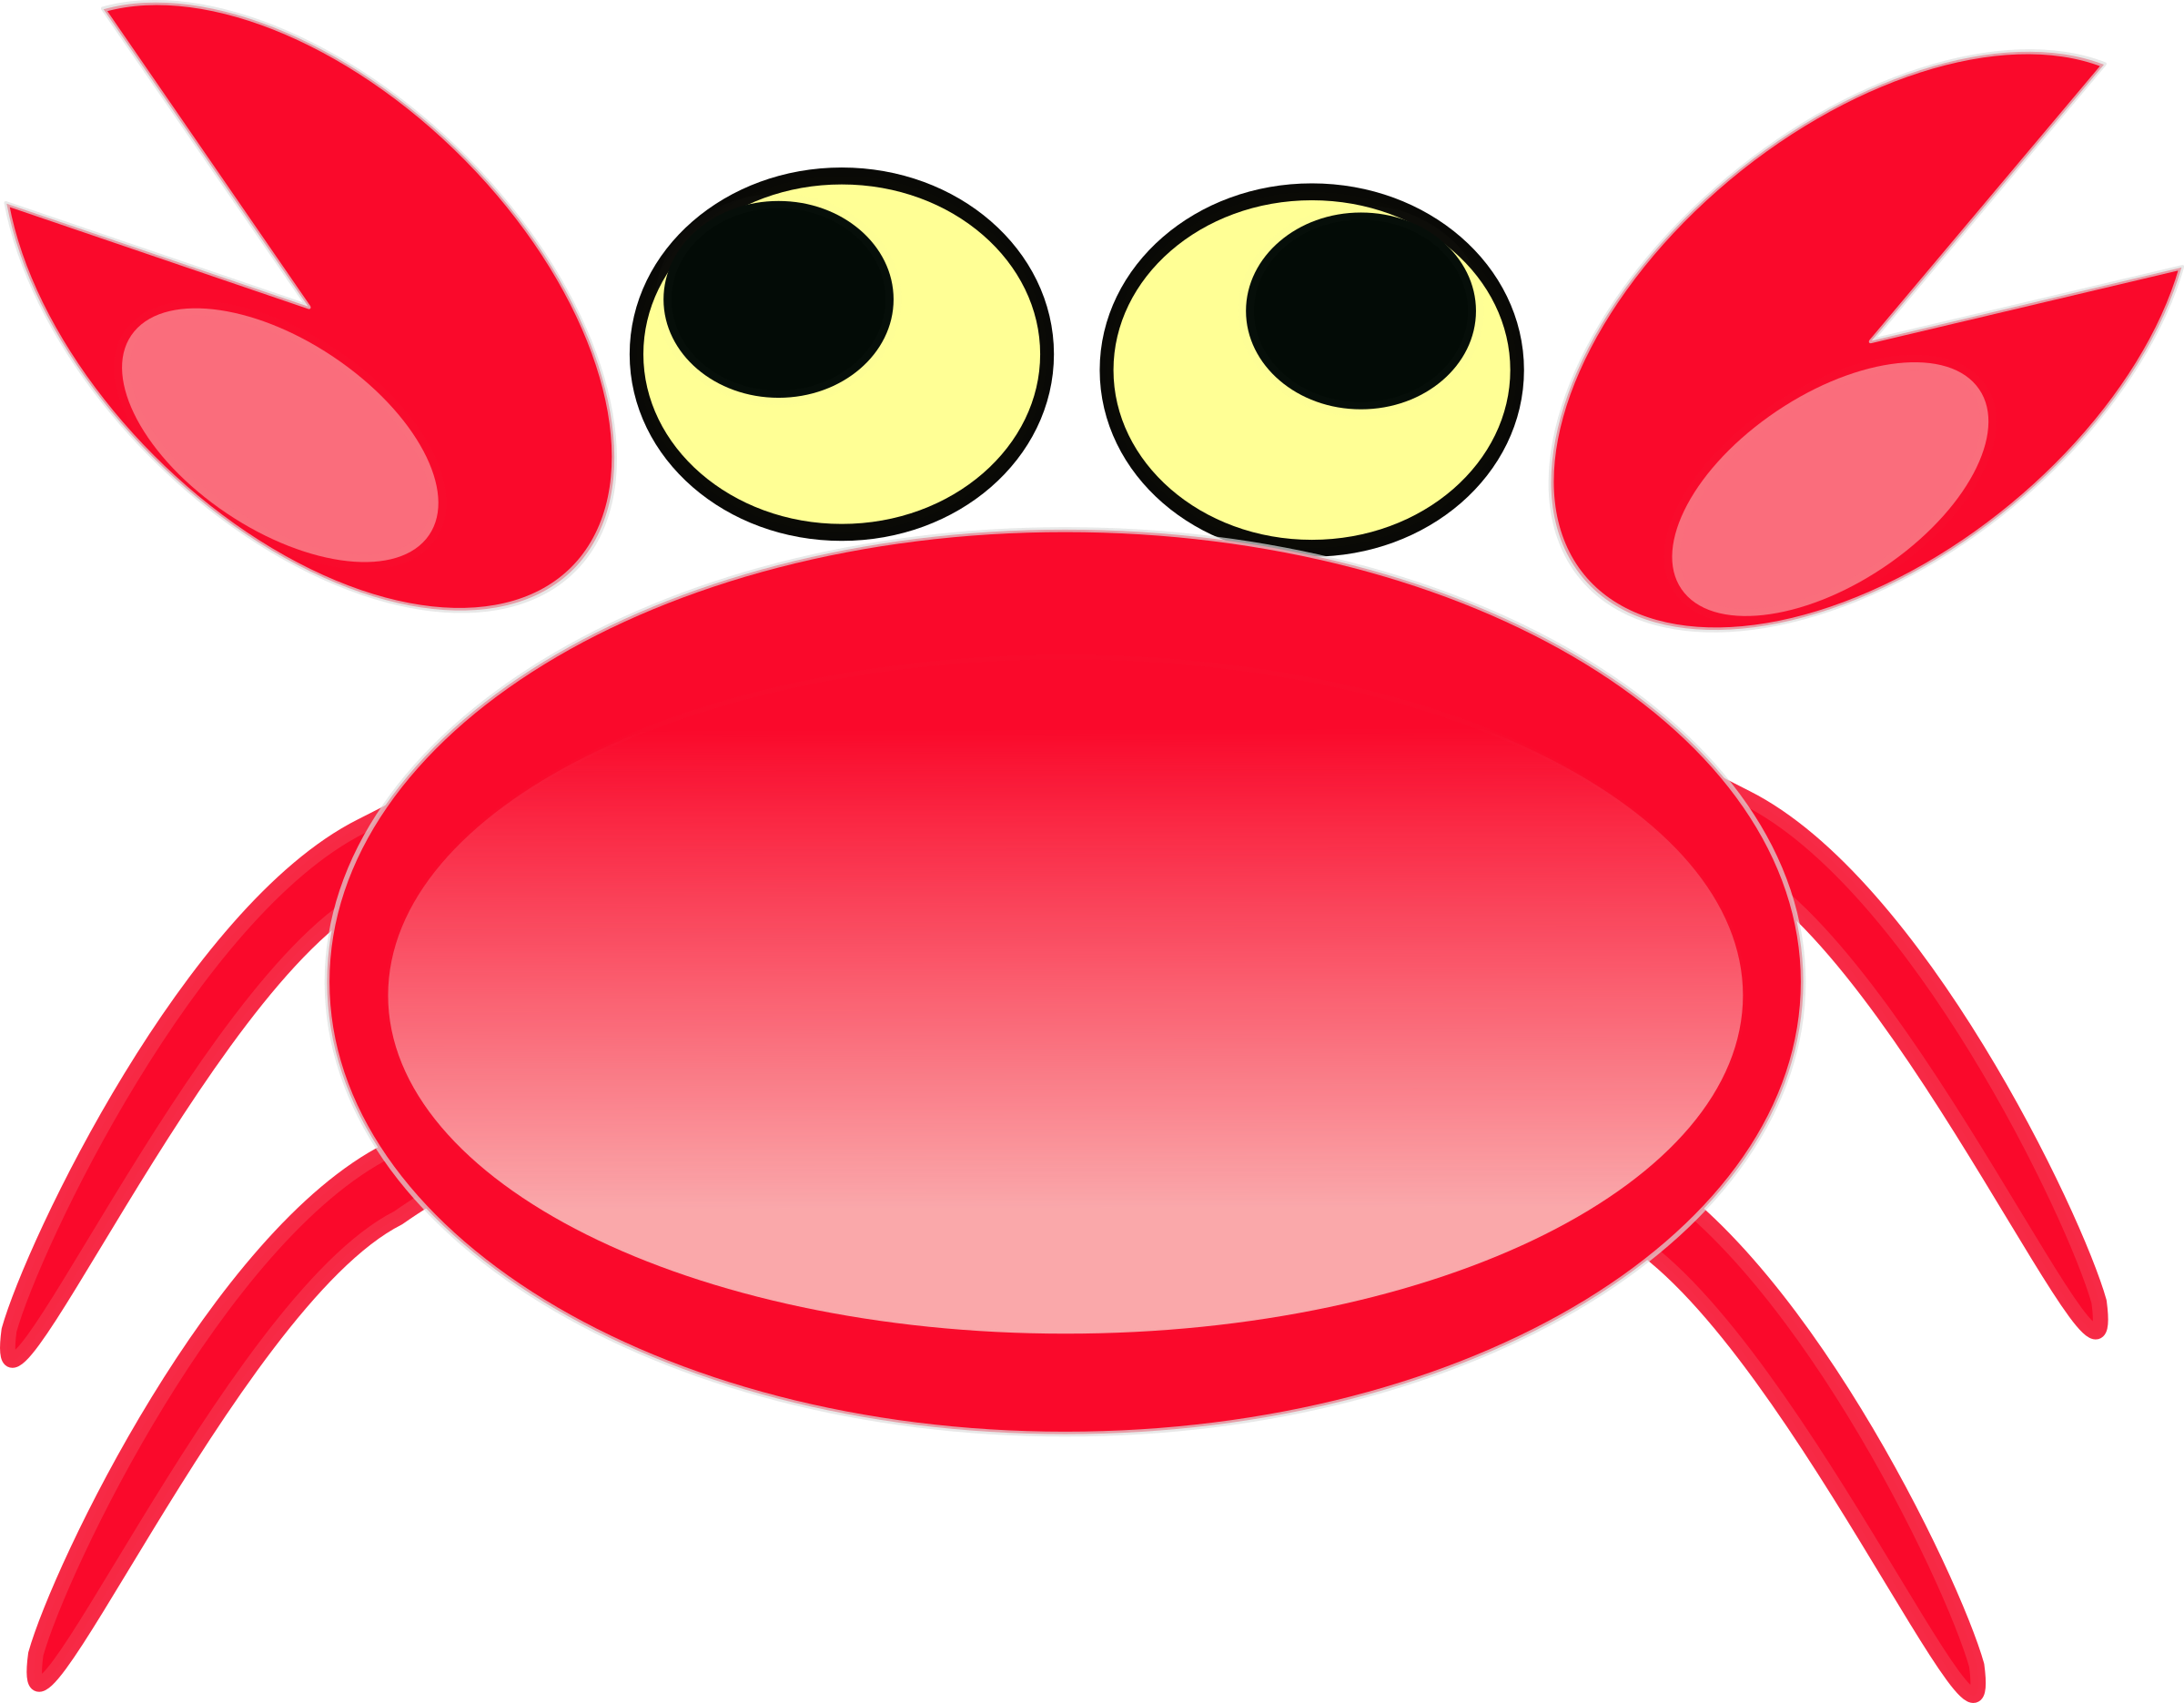 Big image png. Crab clipart red crab